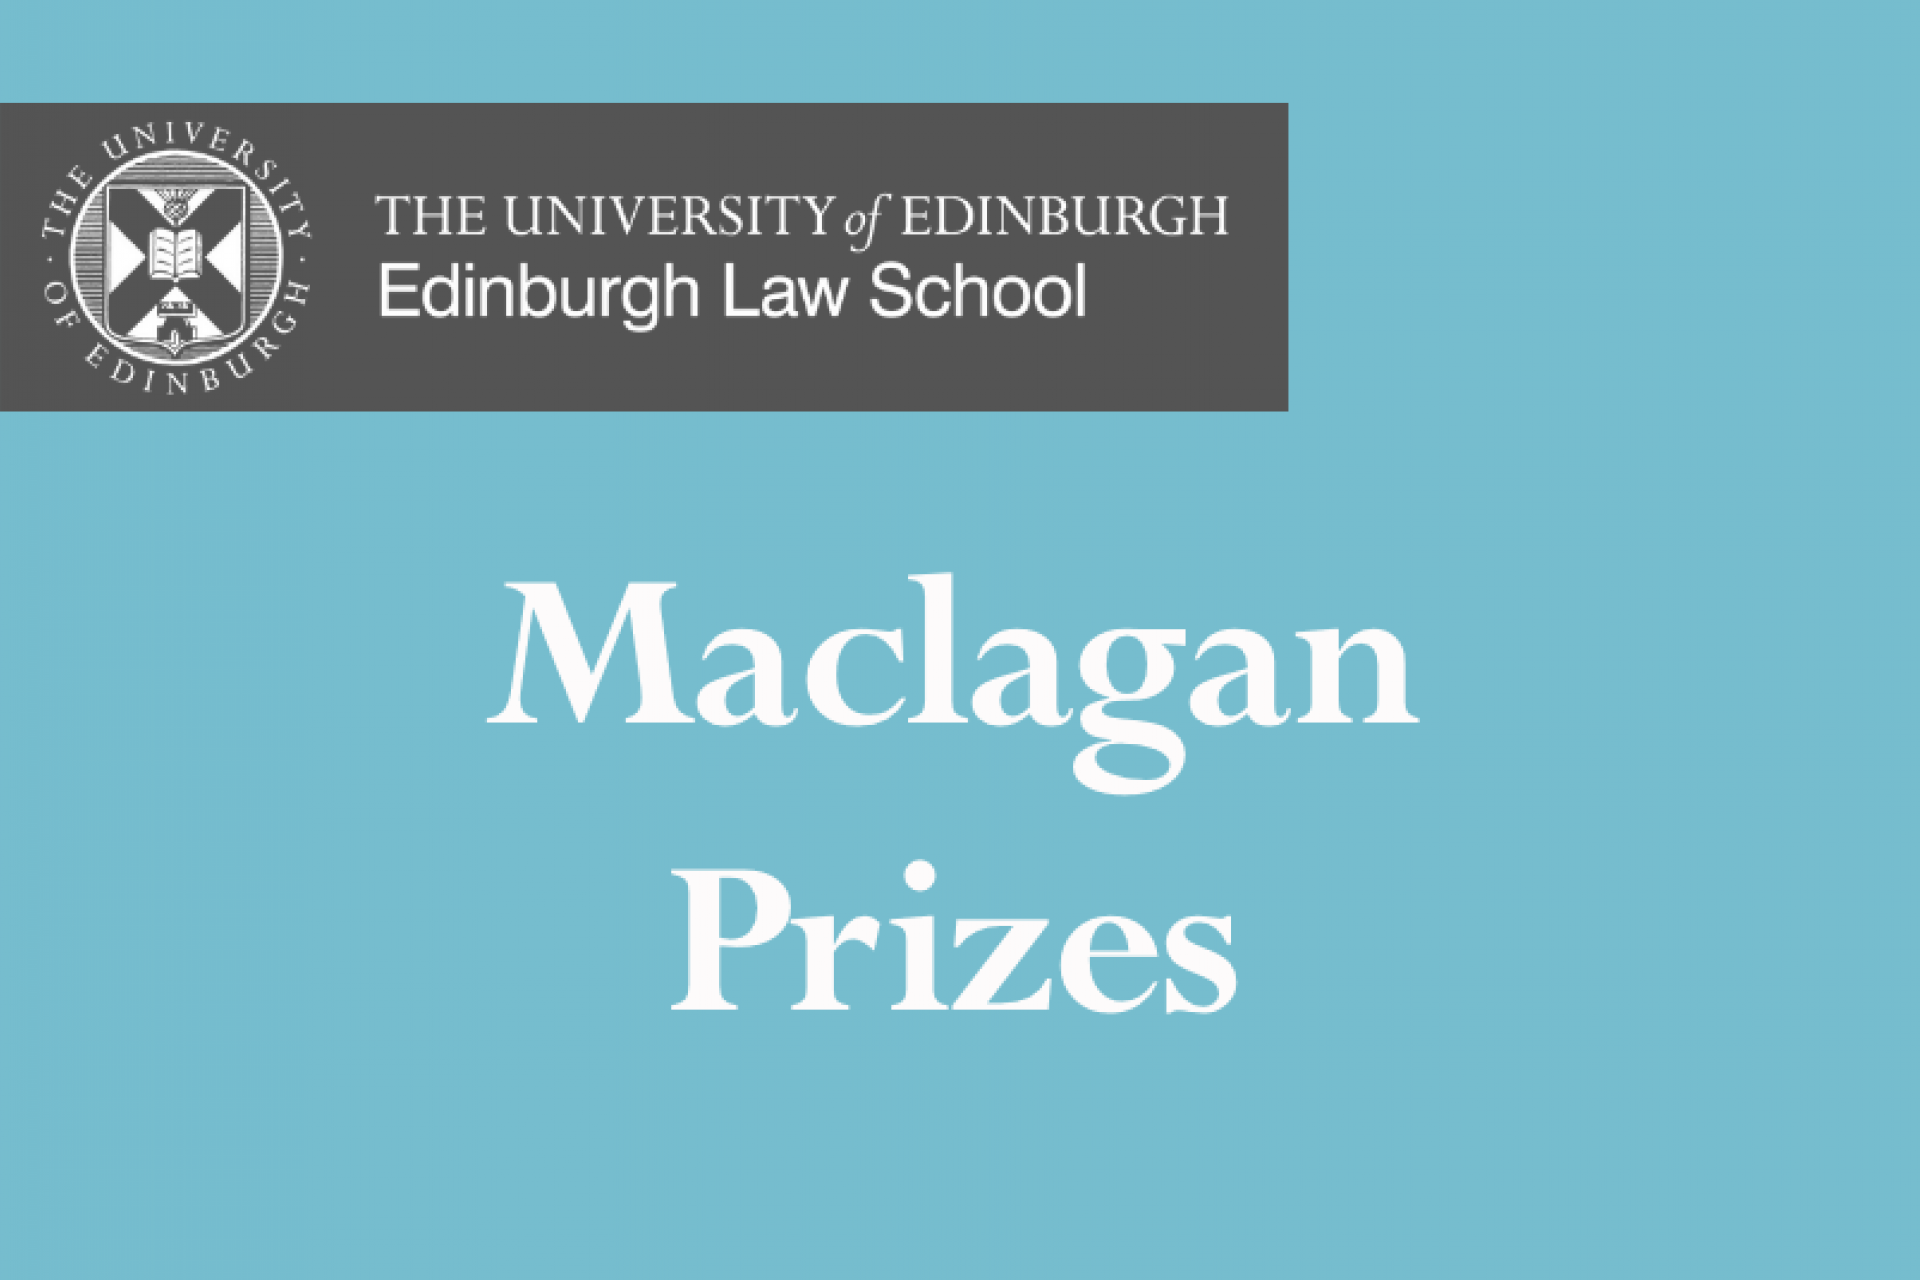 Maclagan Prizes